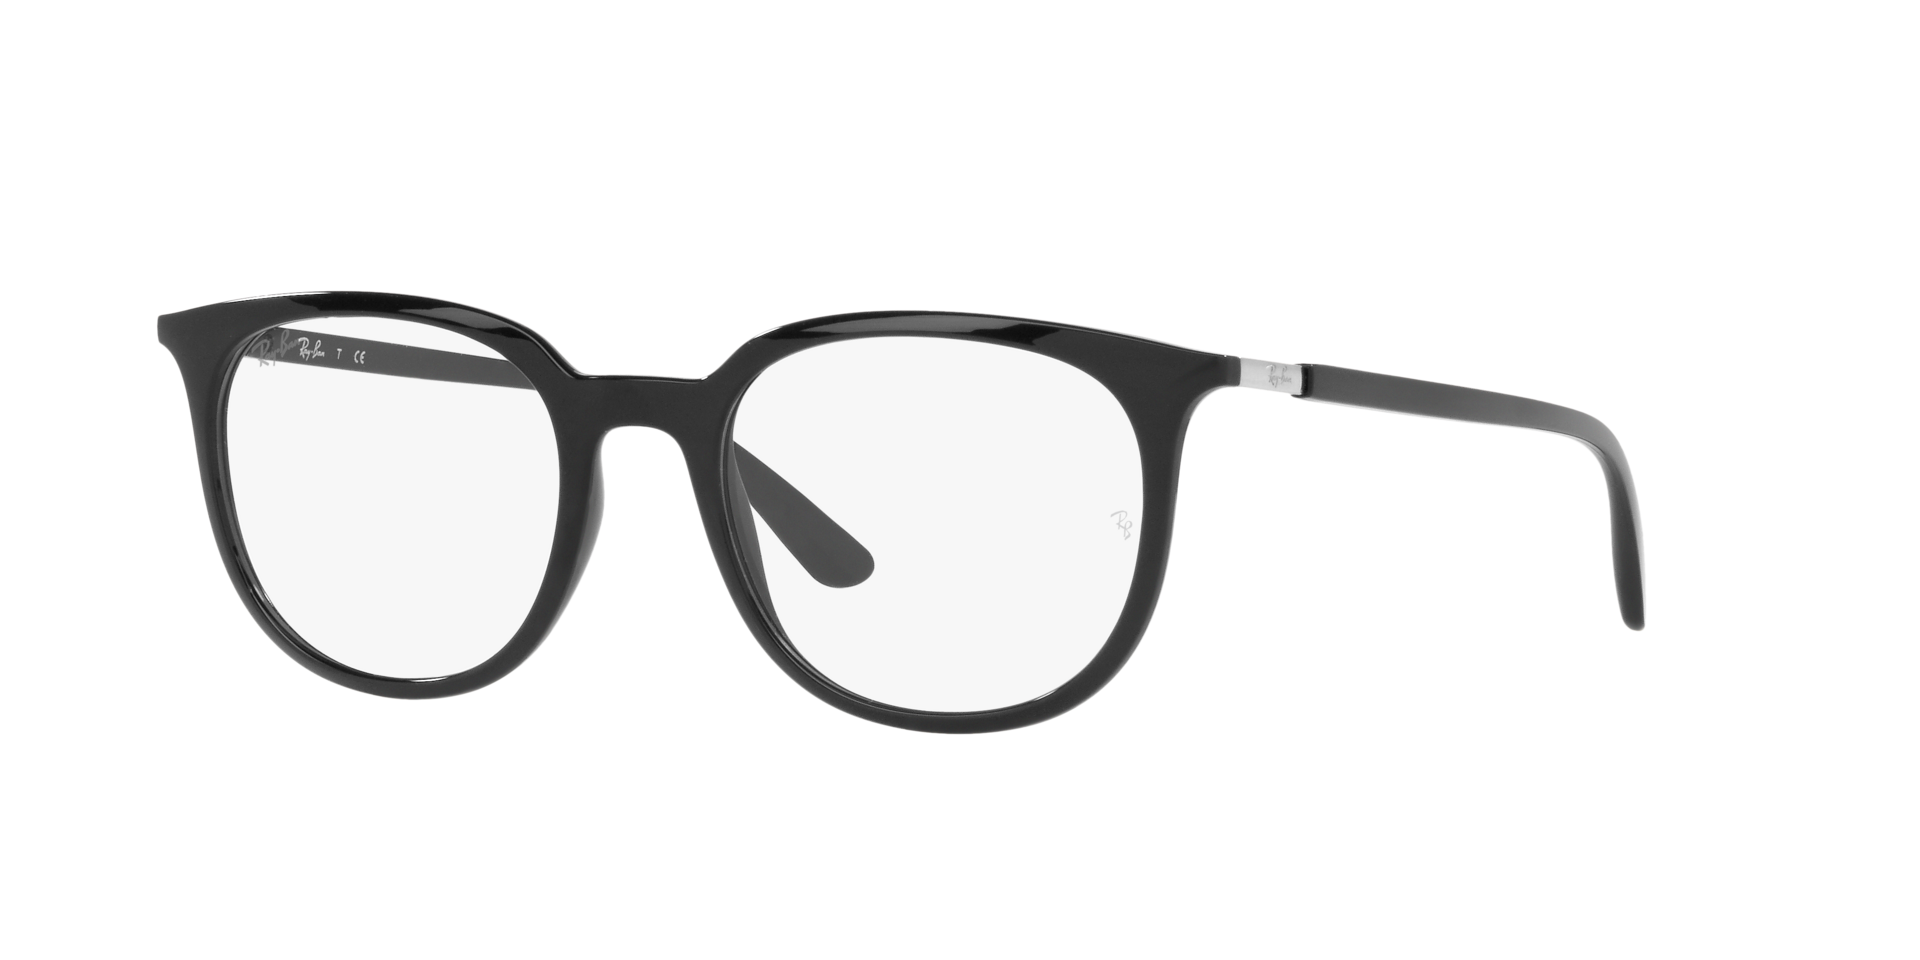 Buy Ray-Ban Rx7190 Eyeglasses Online.